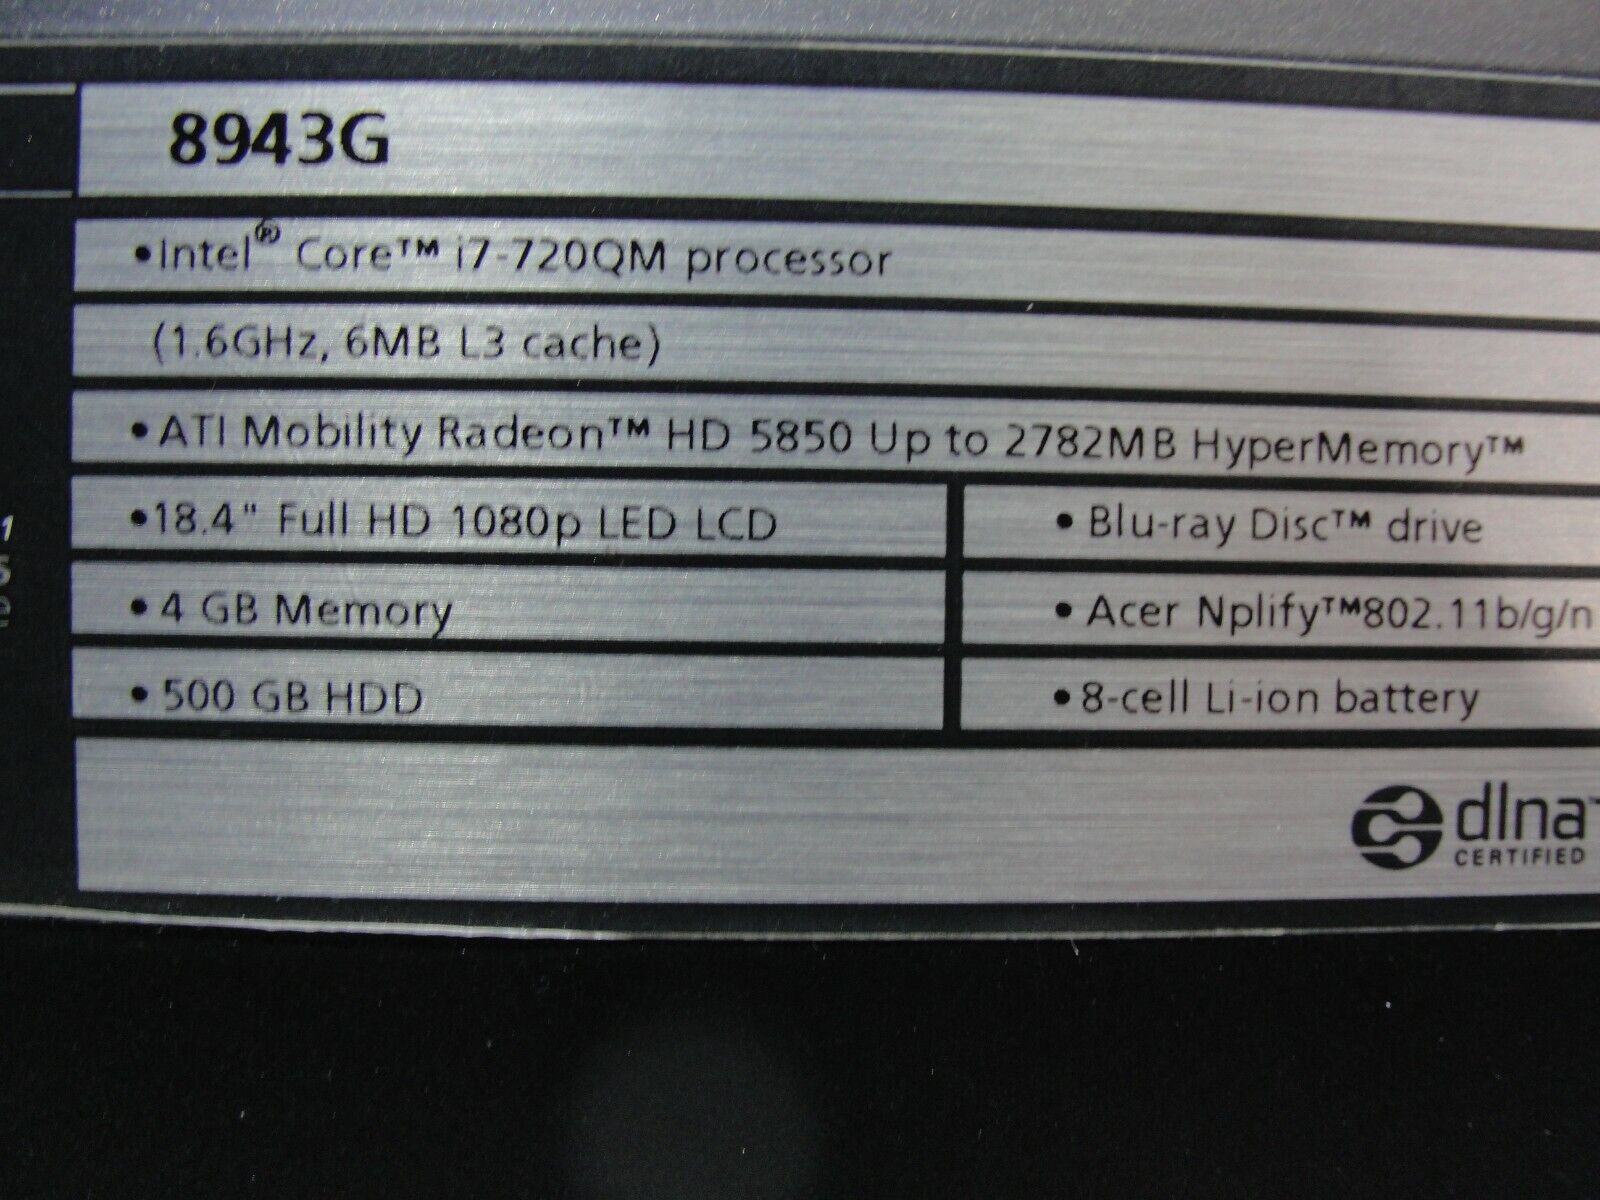 Acer Aspire 8943G-6190 18.4